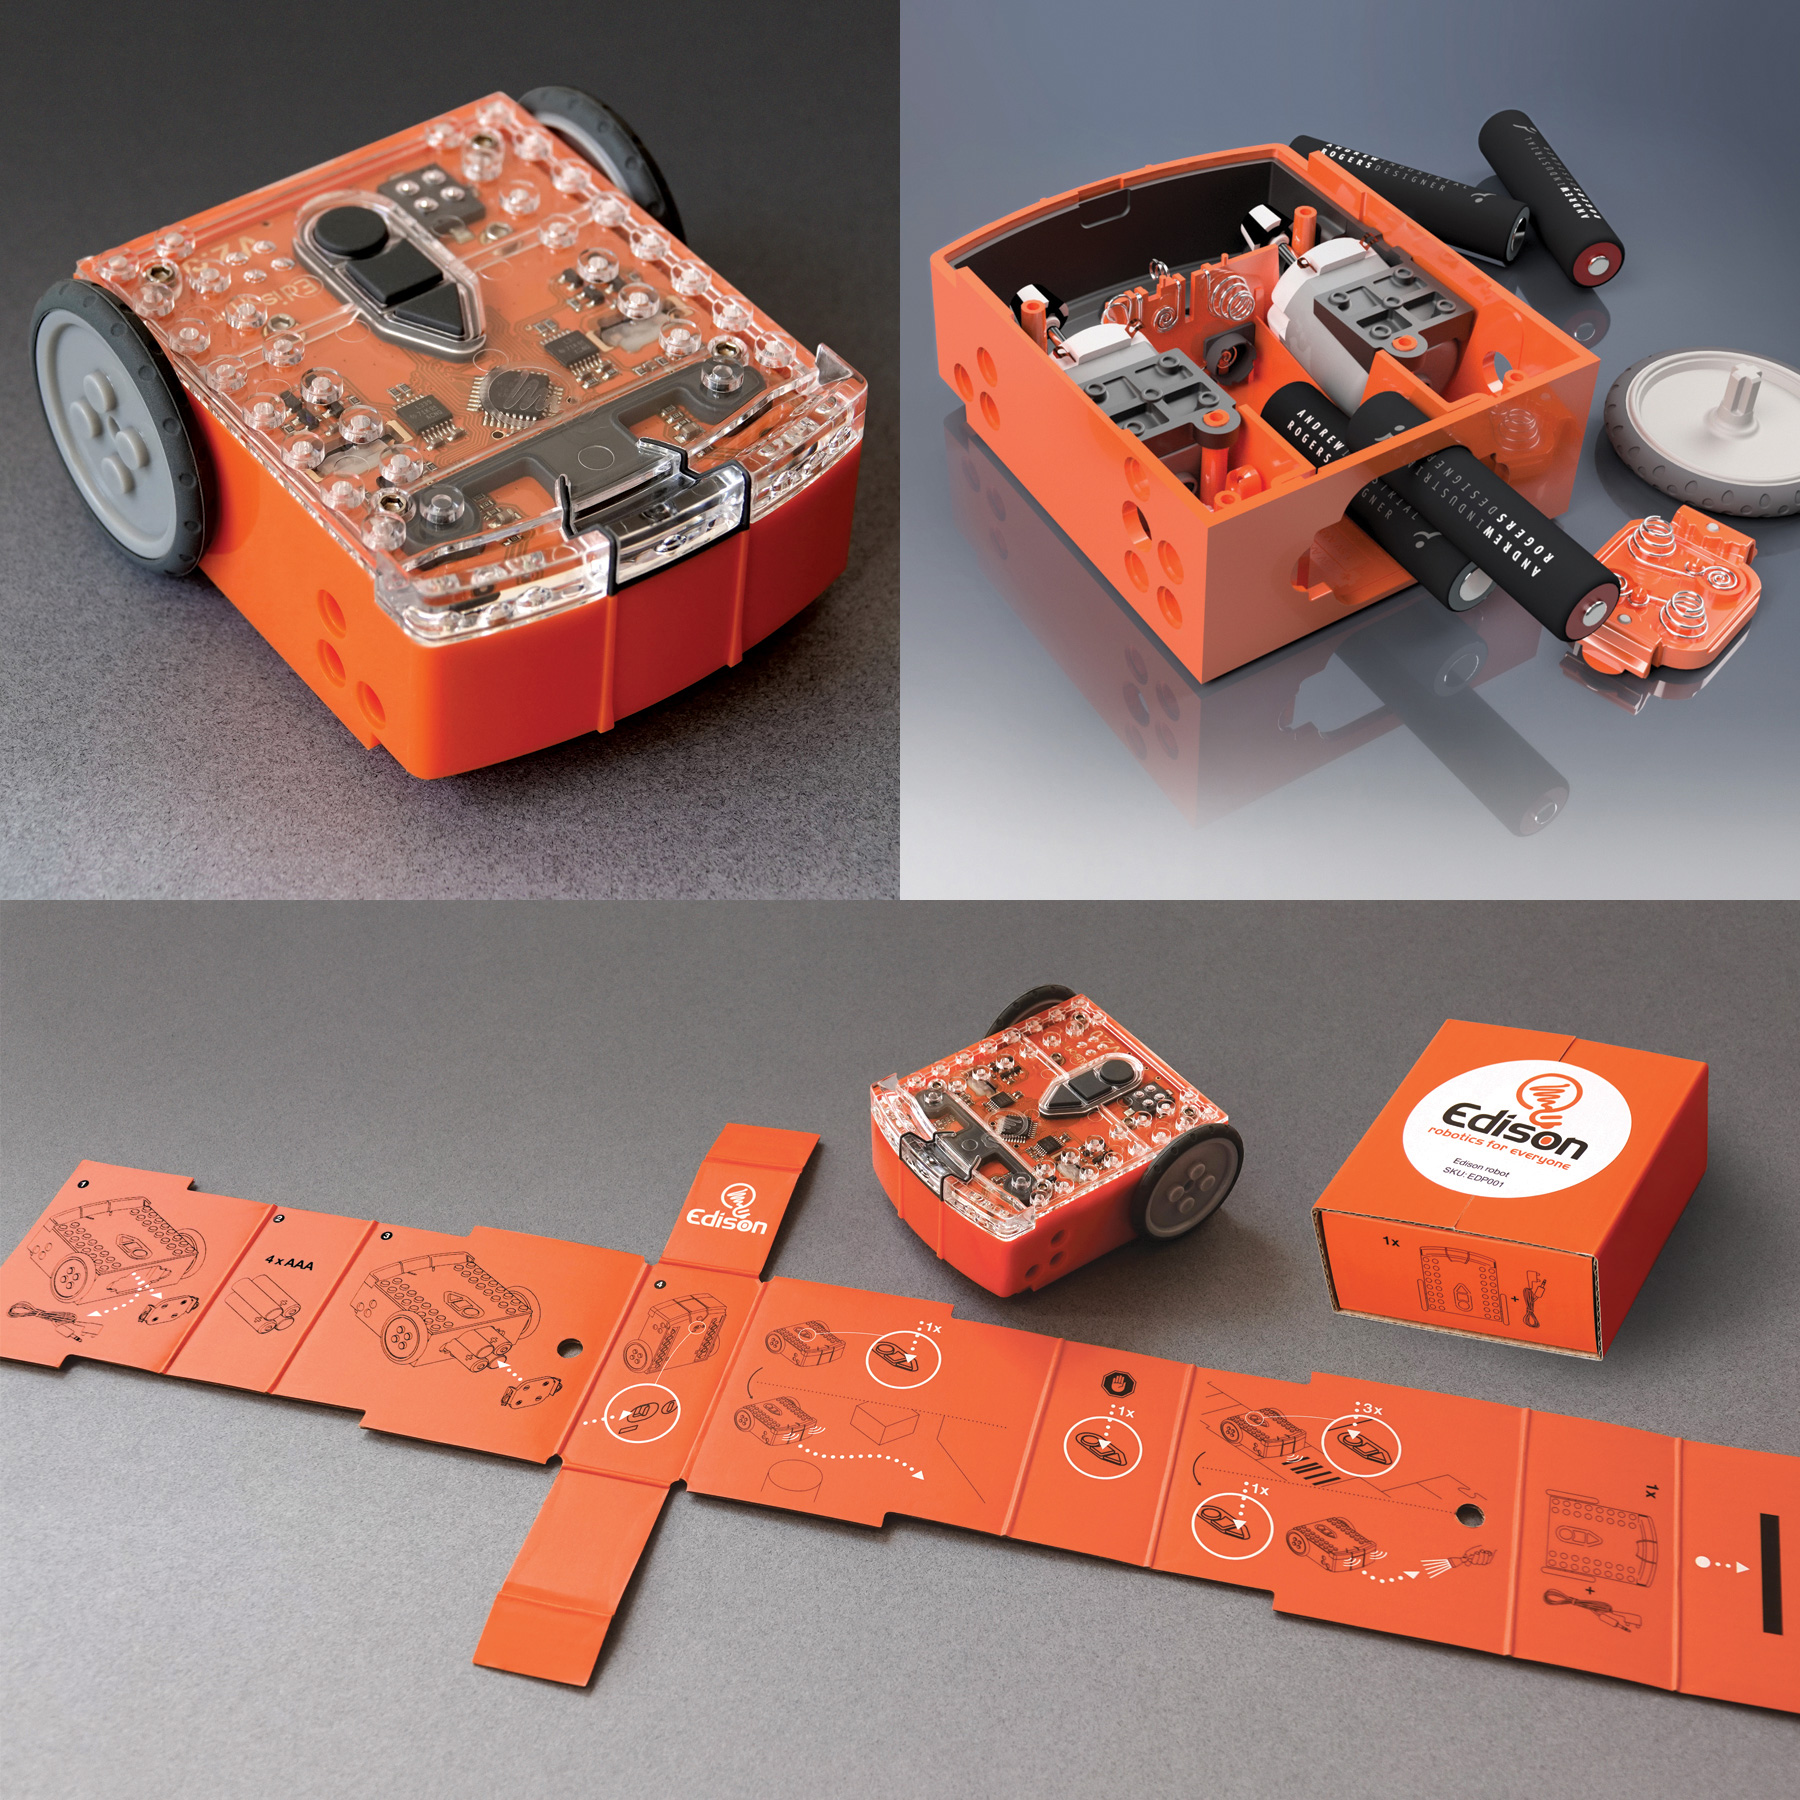 Edison robot - Educational robotics and programming toy